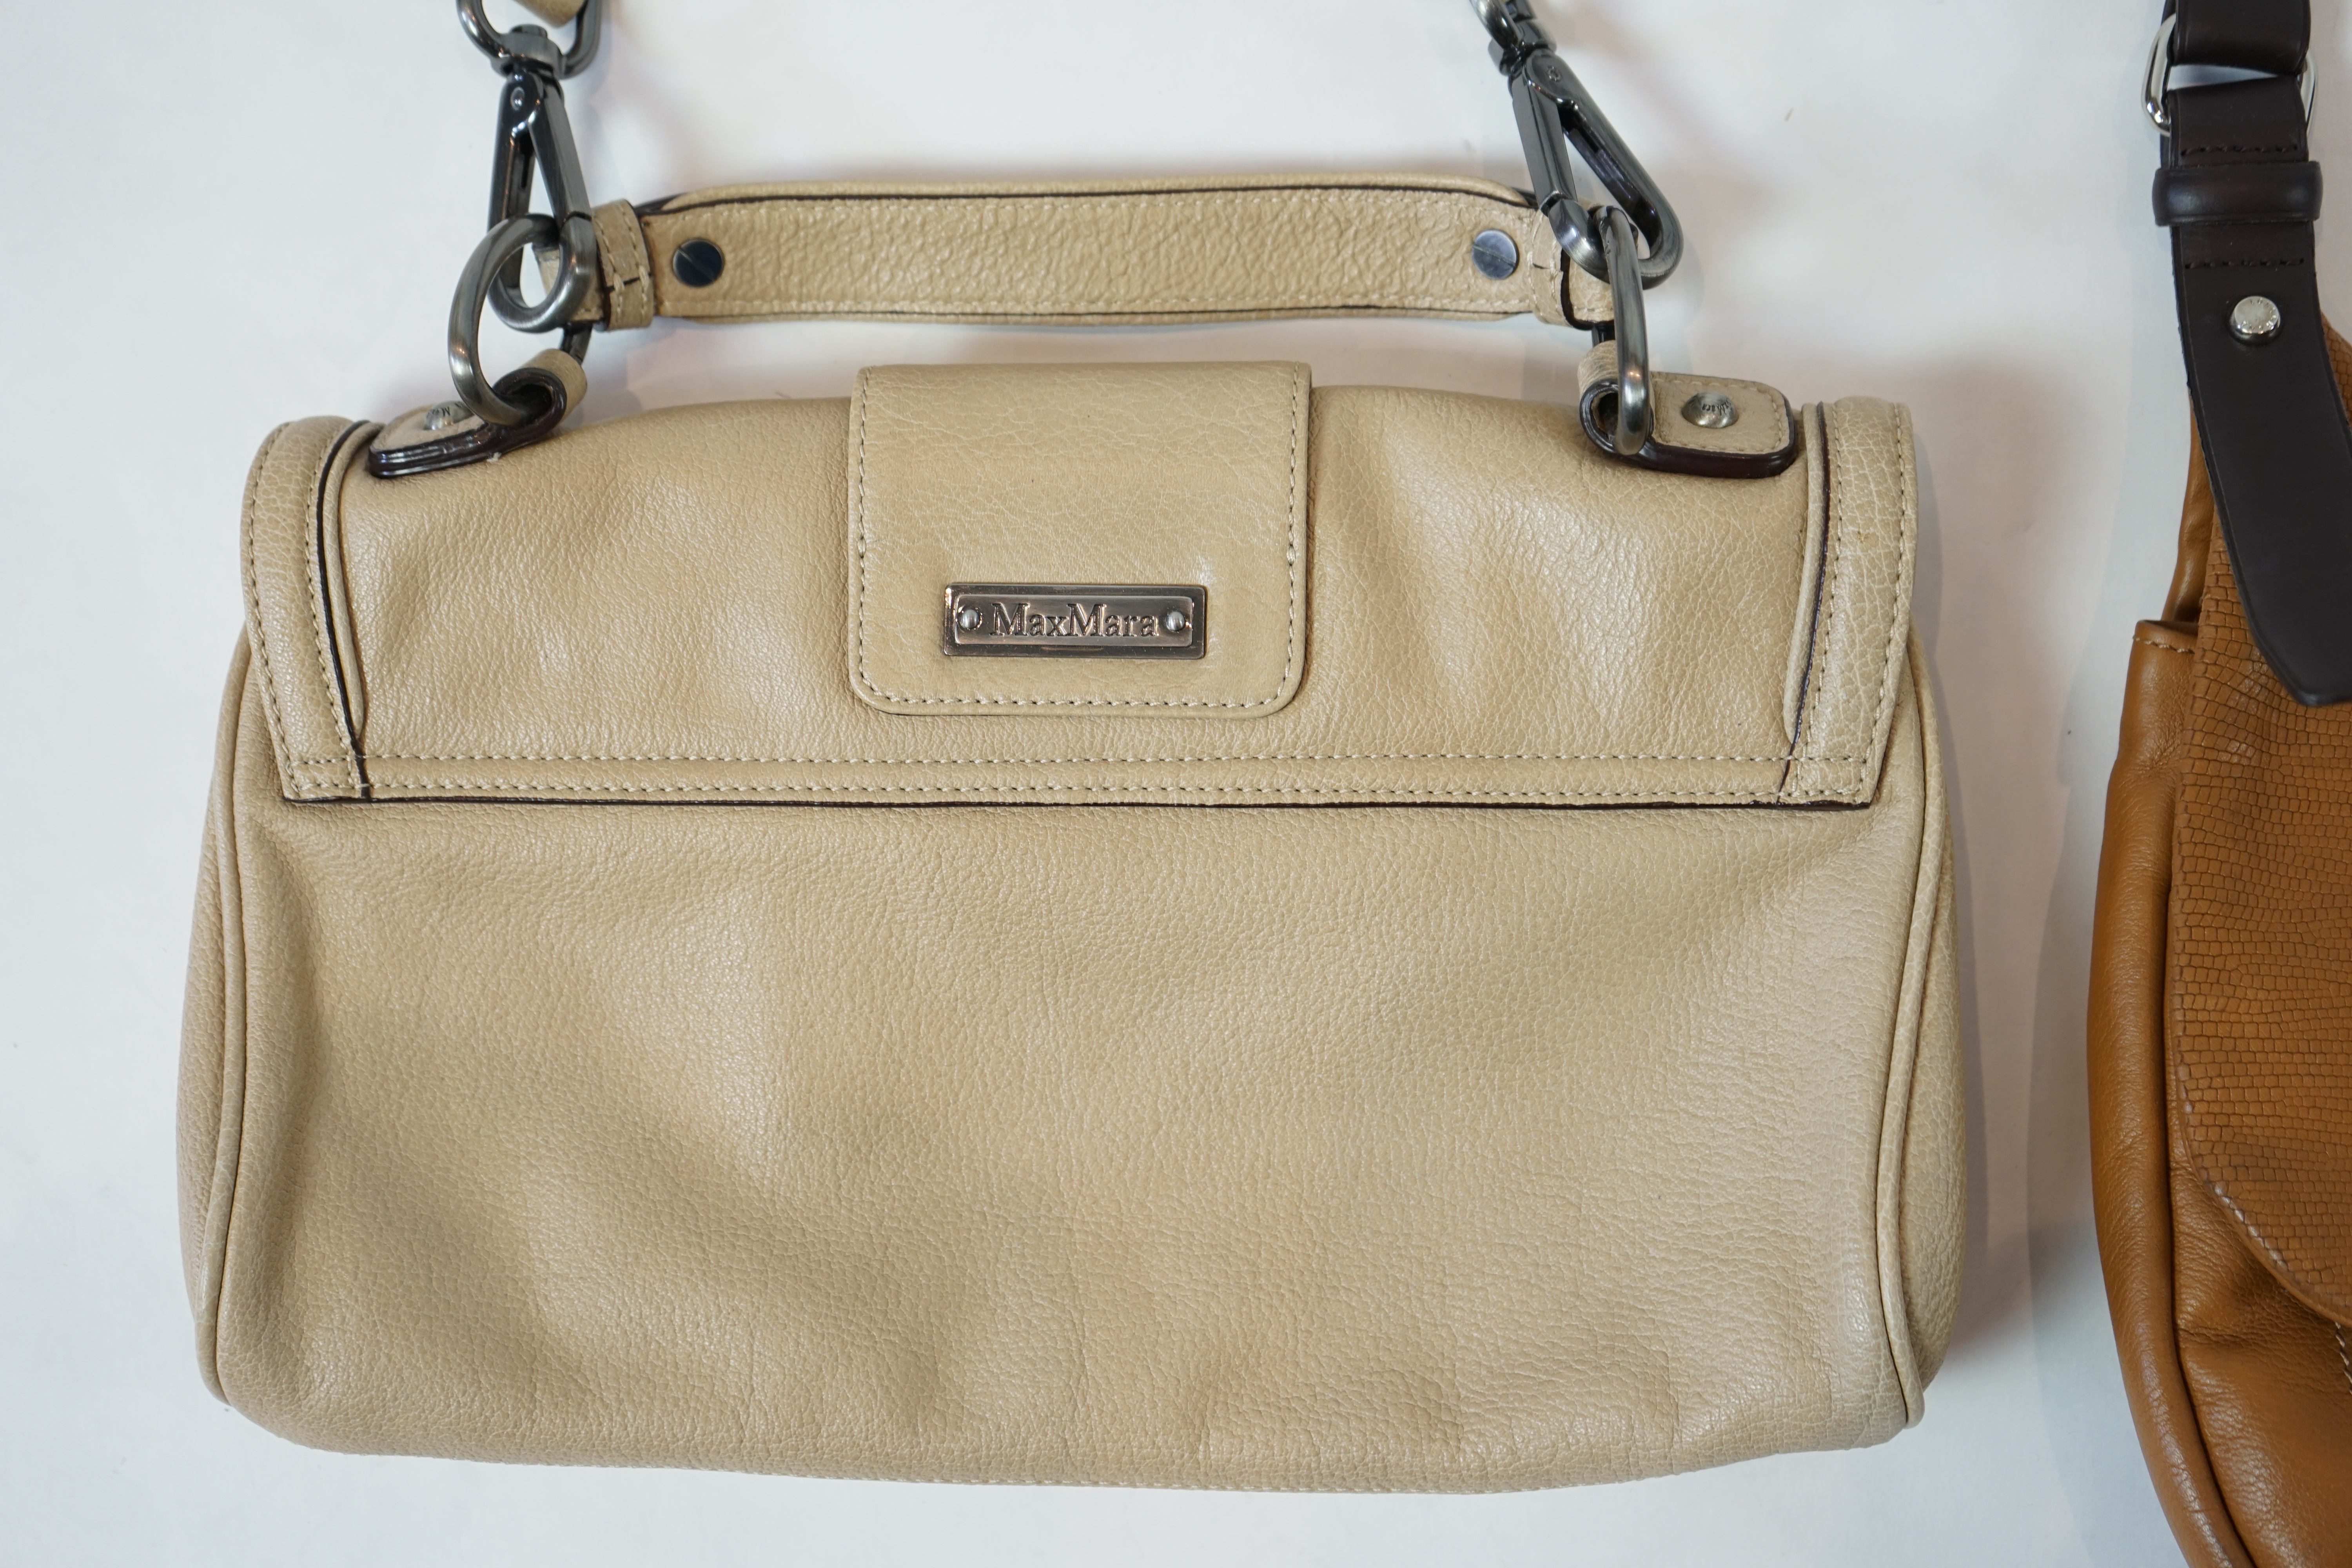 A Max Mara handbag and a Longchamp satchel style bag.